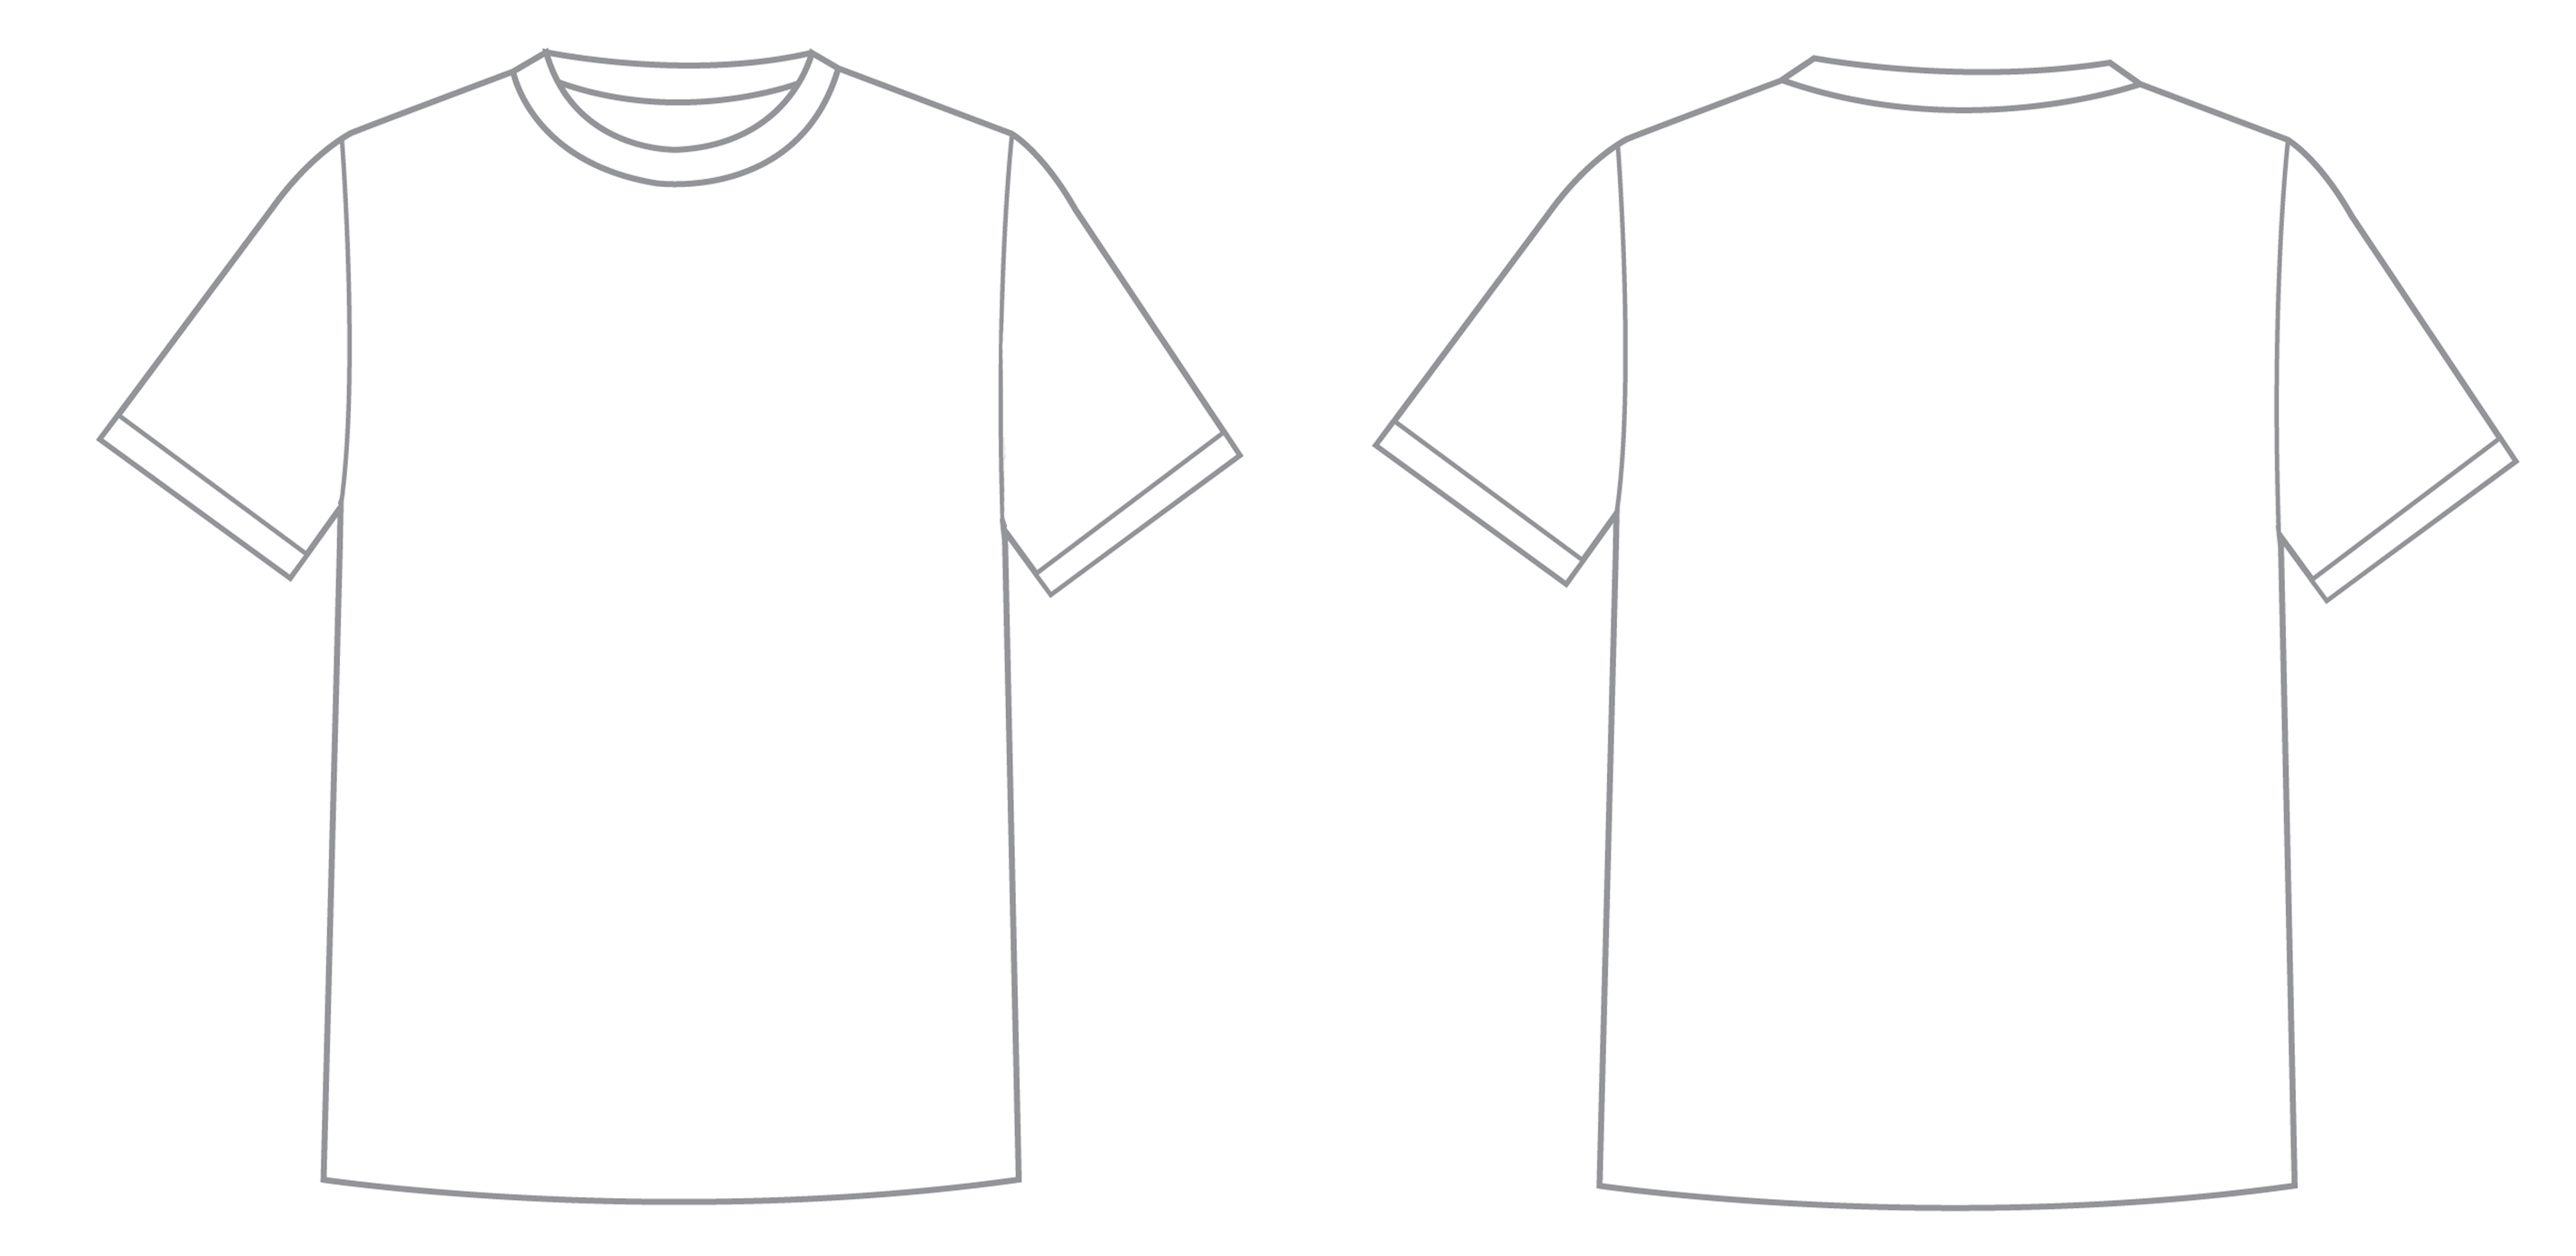 15-large-t-shirt-template-images-printable-t-shirt-template-t-shirt